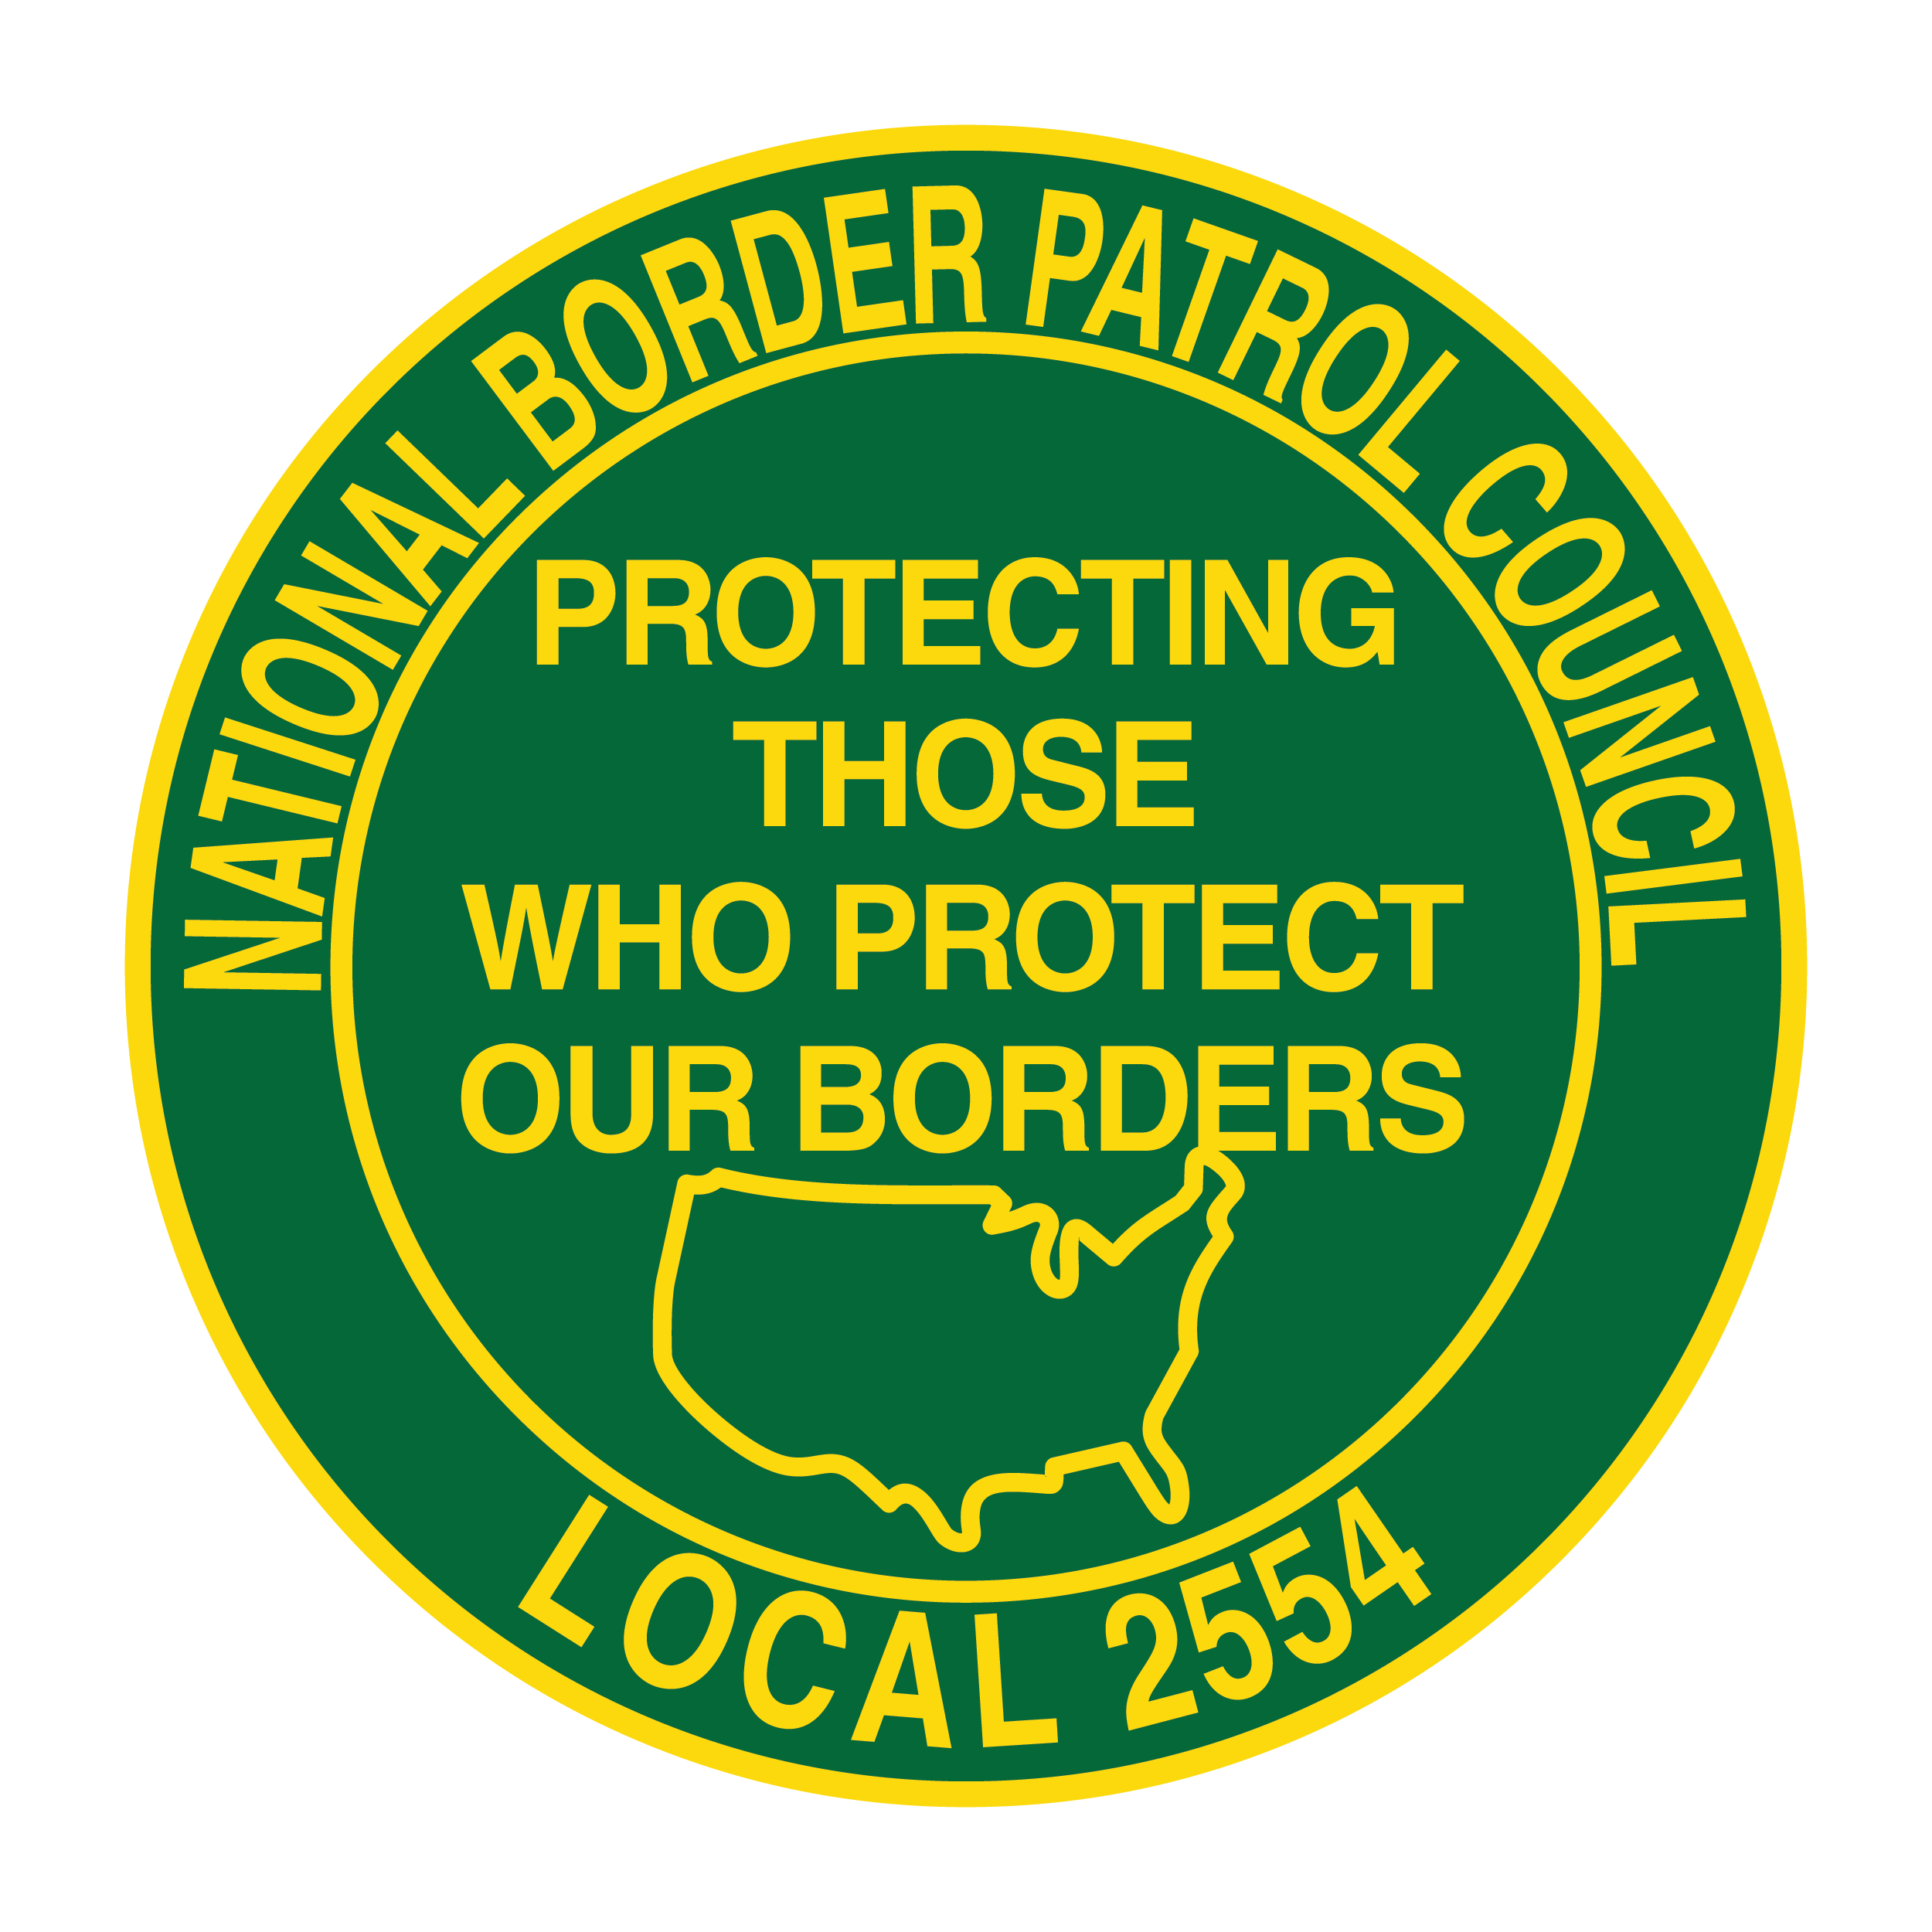 Broad Jurisdiction Of U.S. Border Patrol Raises Concerns About